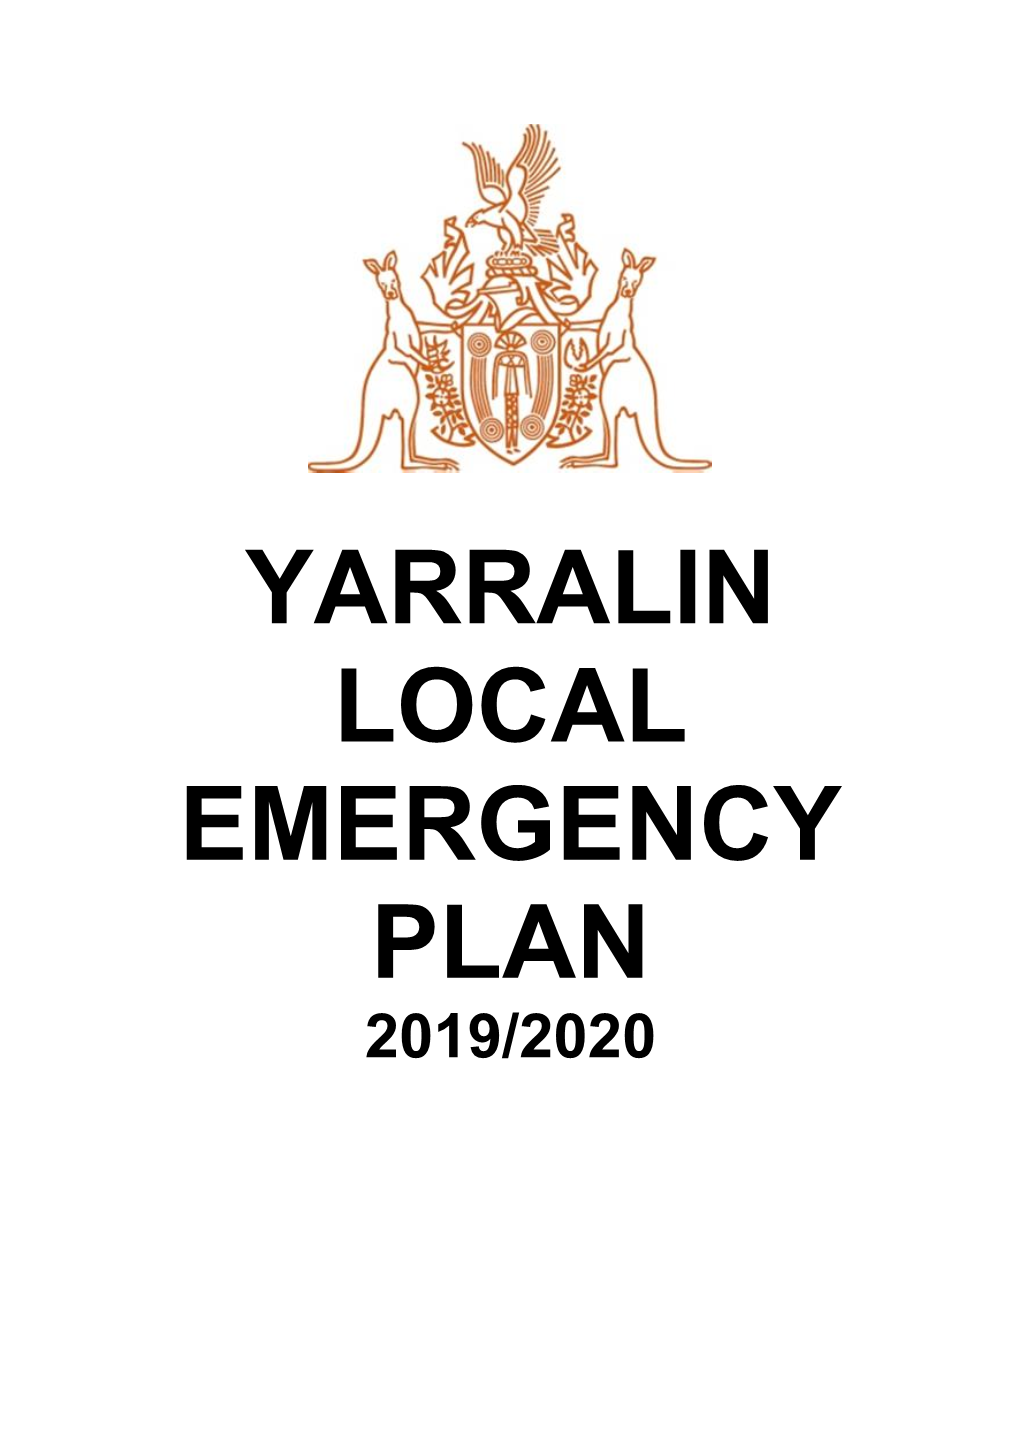 Yarralin Local Emergency Plan 2019/2020